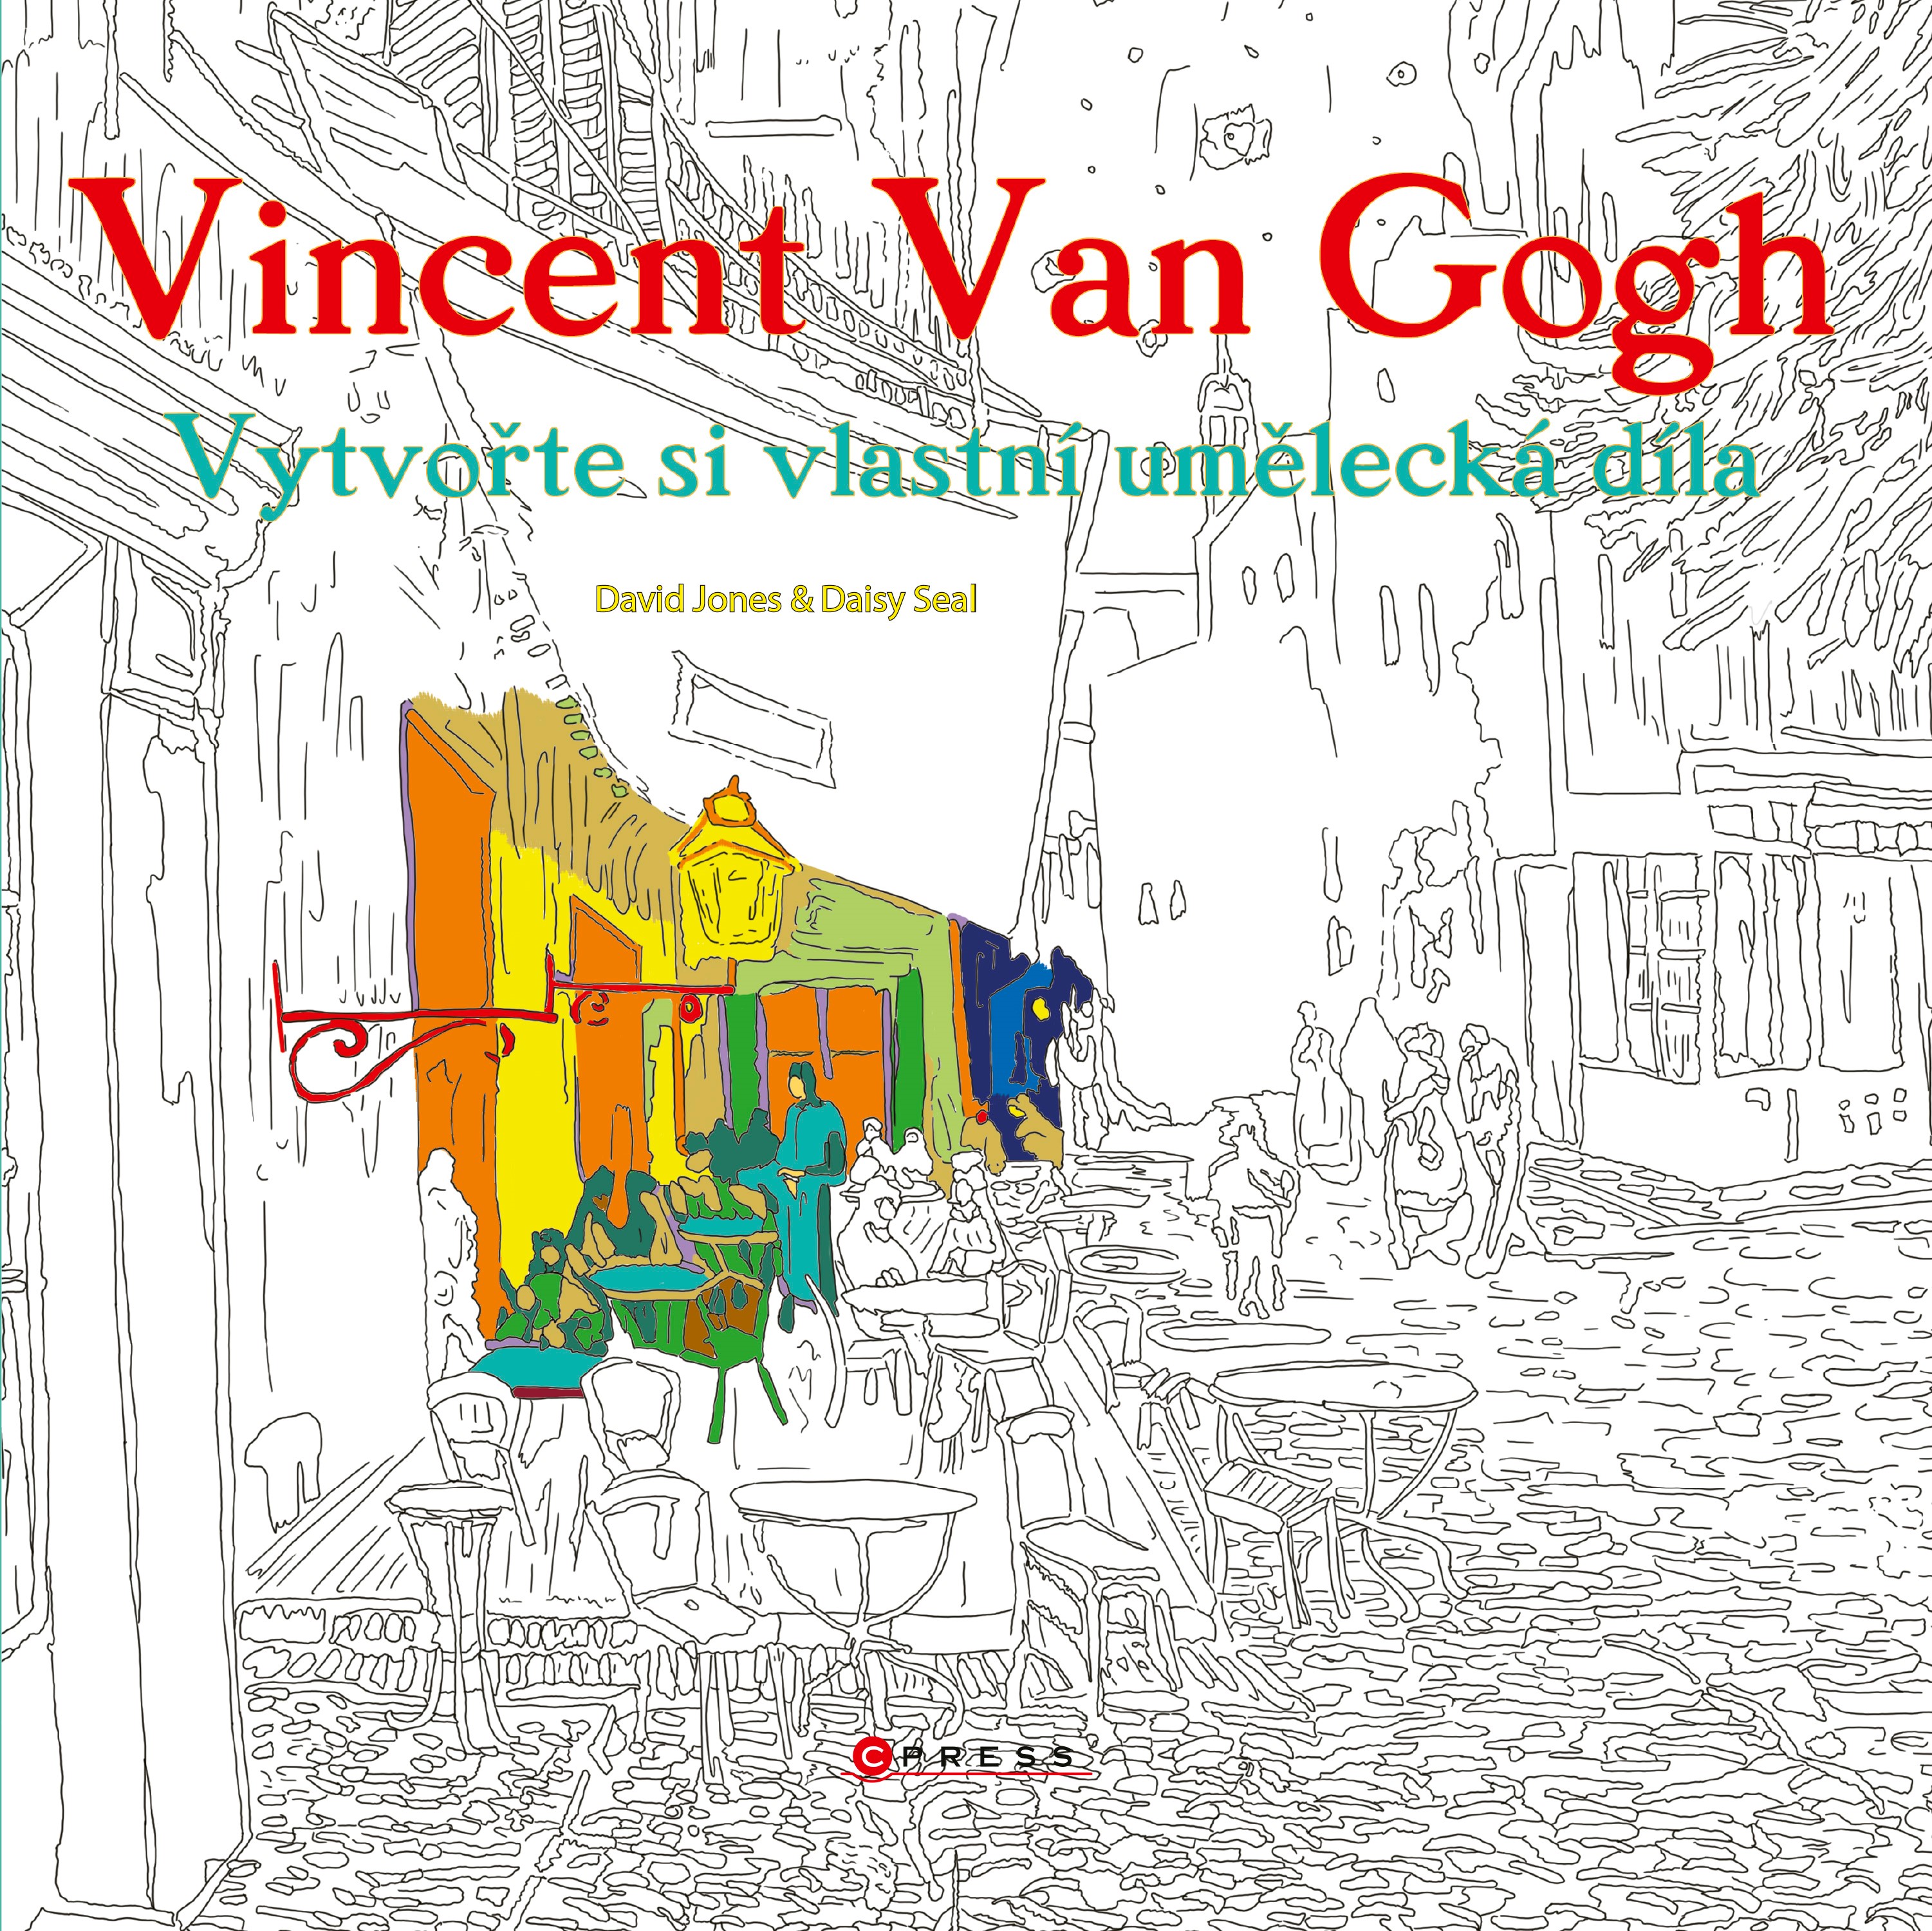 Vincent van Gogh: Vytvořte si vlastní umělecká díla